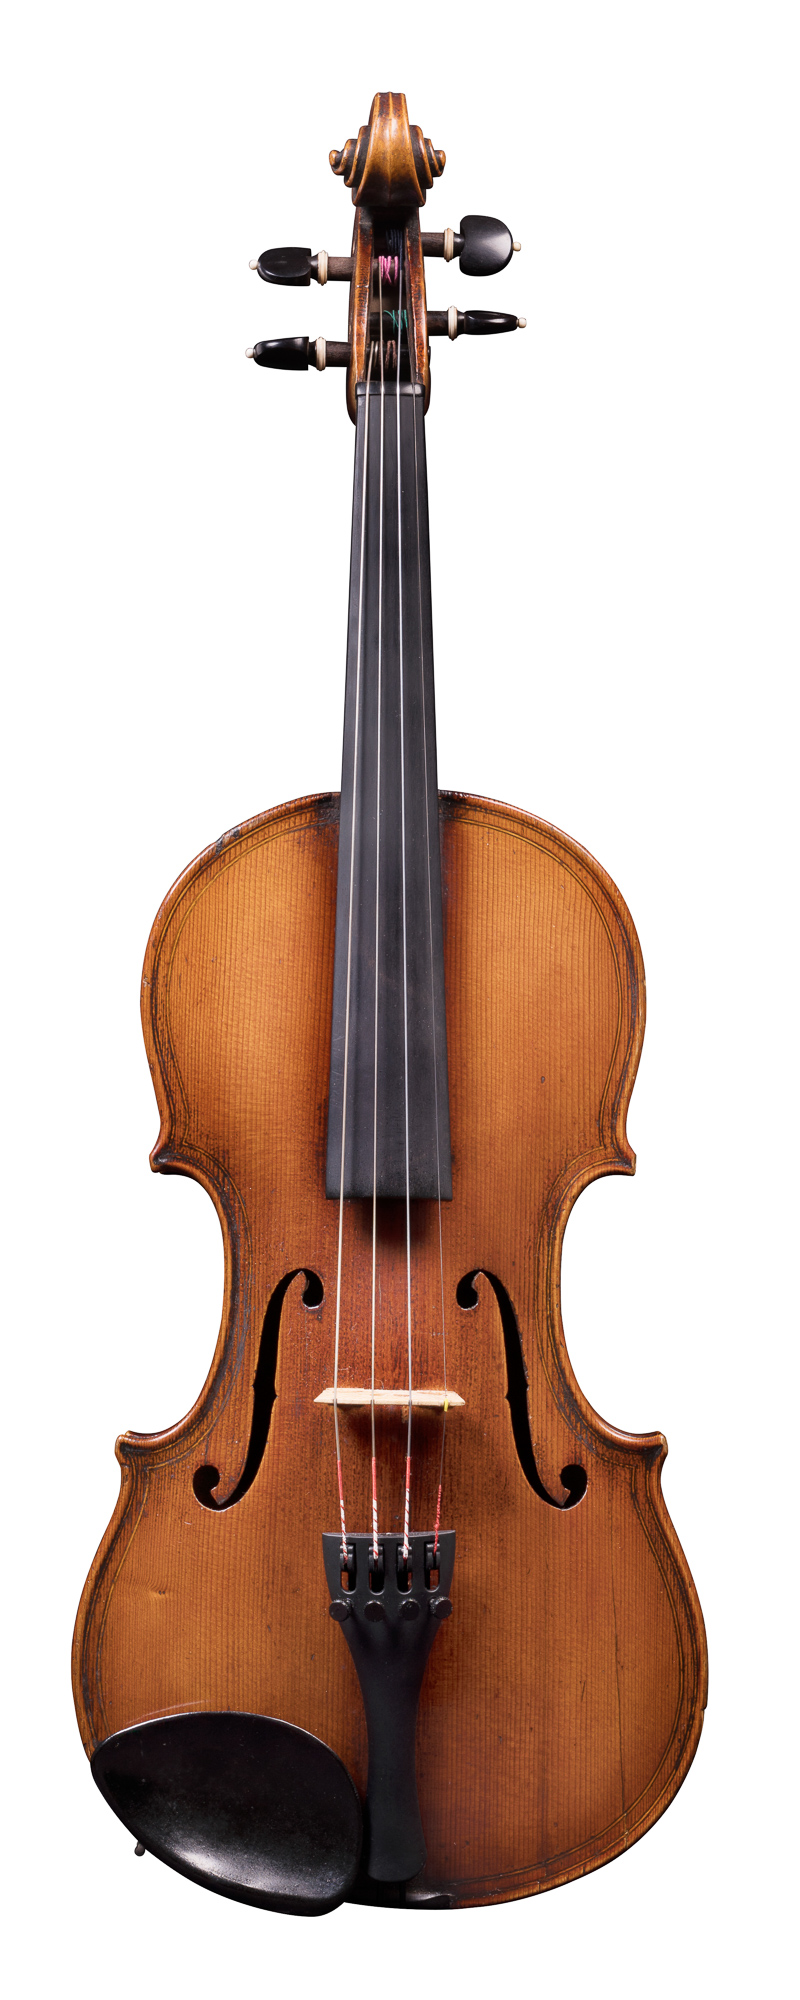 Violin from the Glaesel Workshop, Germany c. 1920 (Maggini copy)